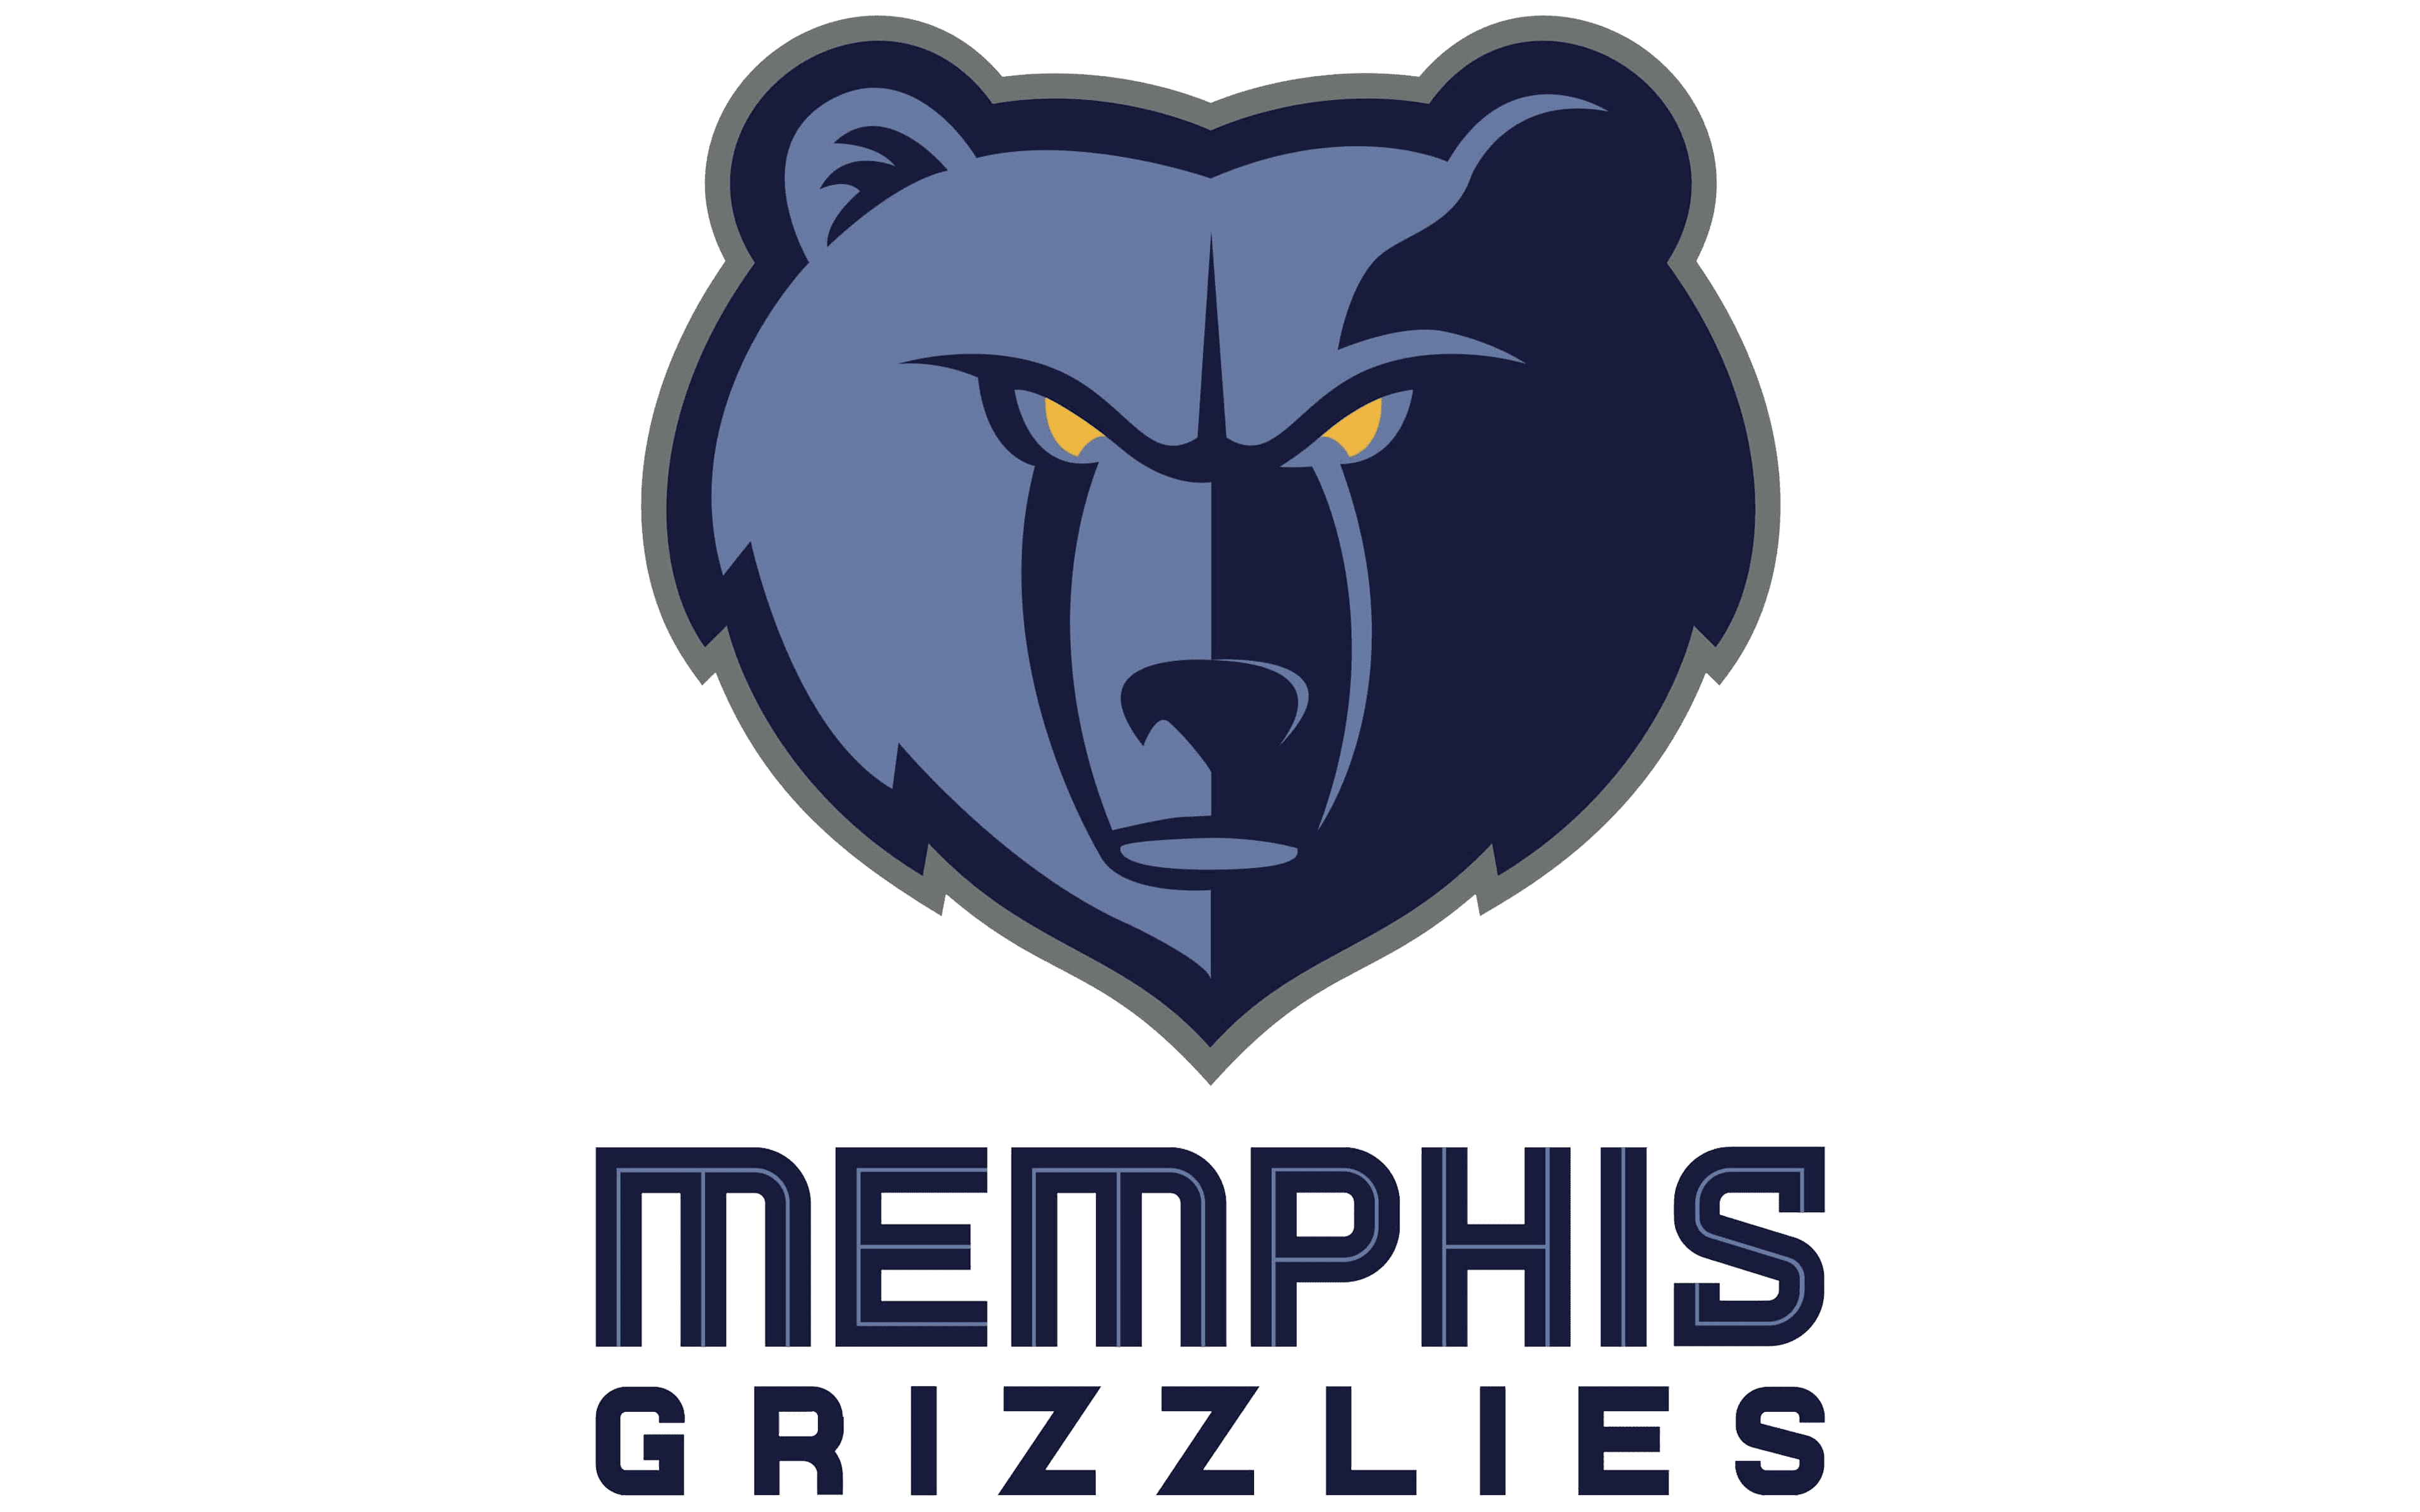 Memphis Grizzlies history